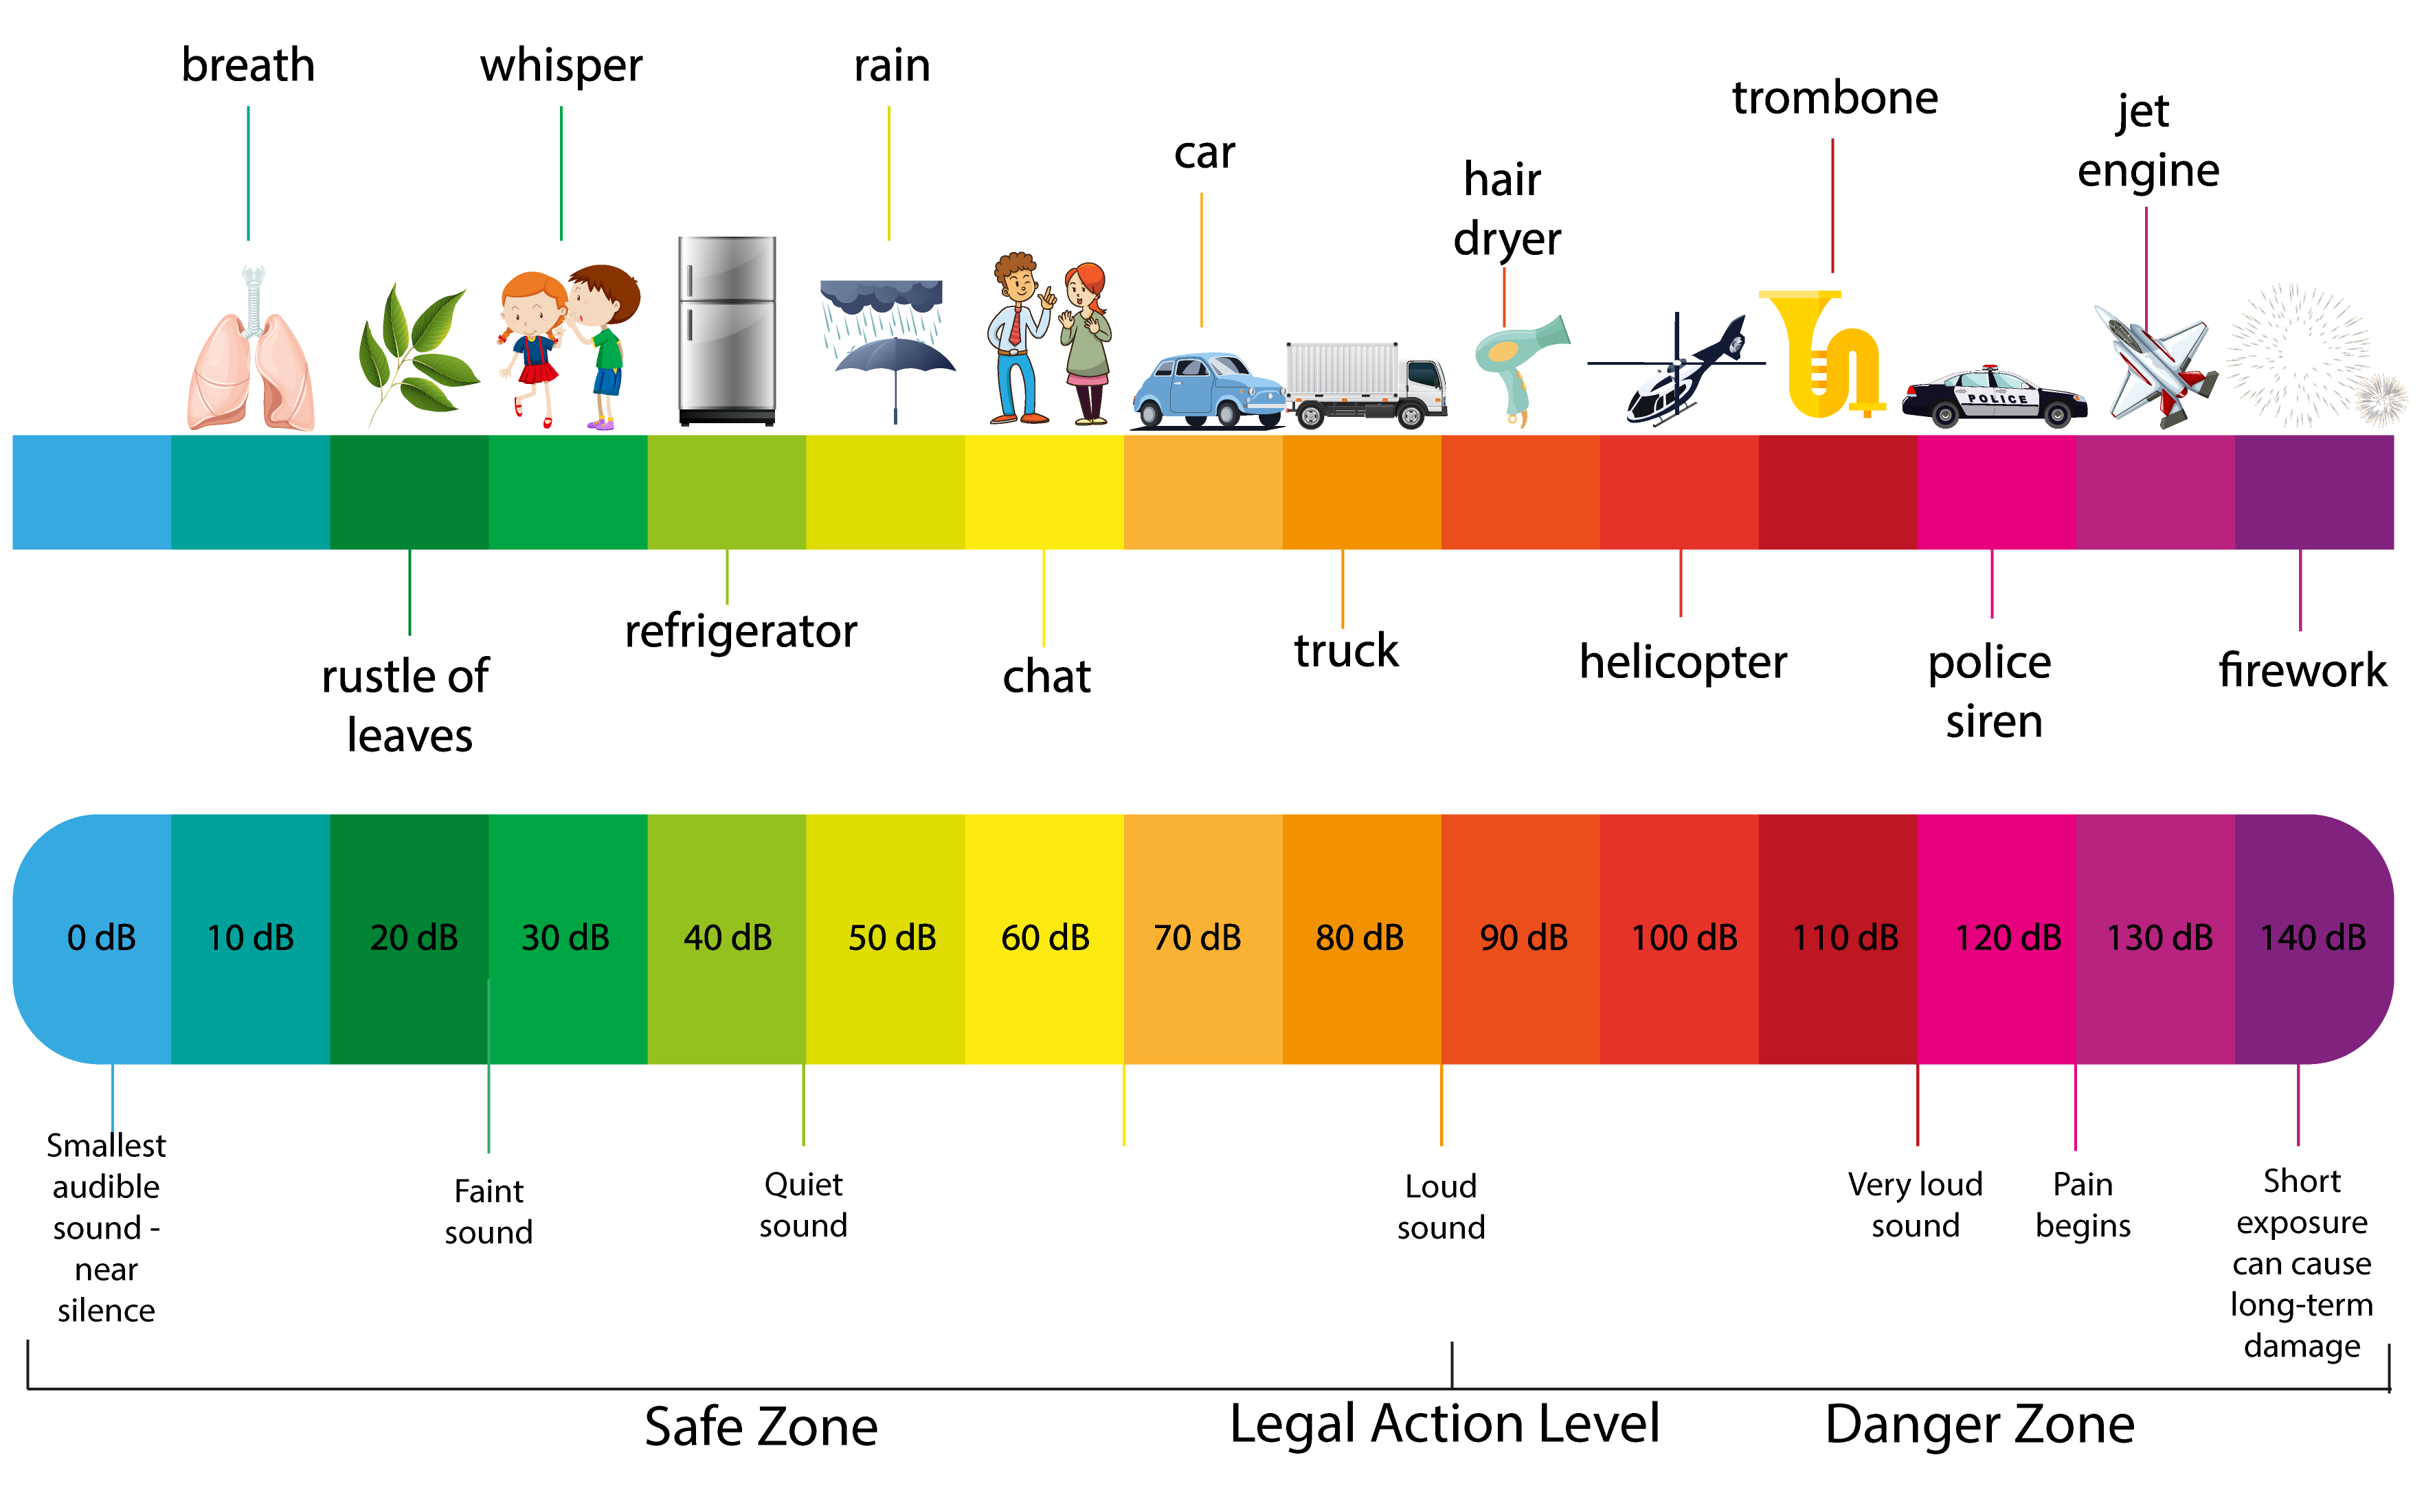 decibel level scale